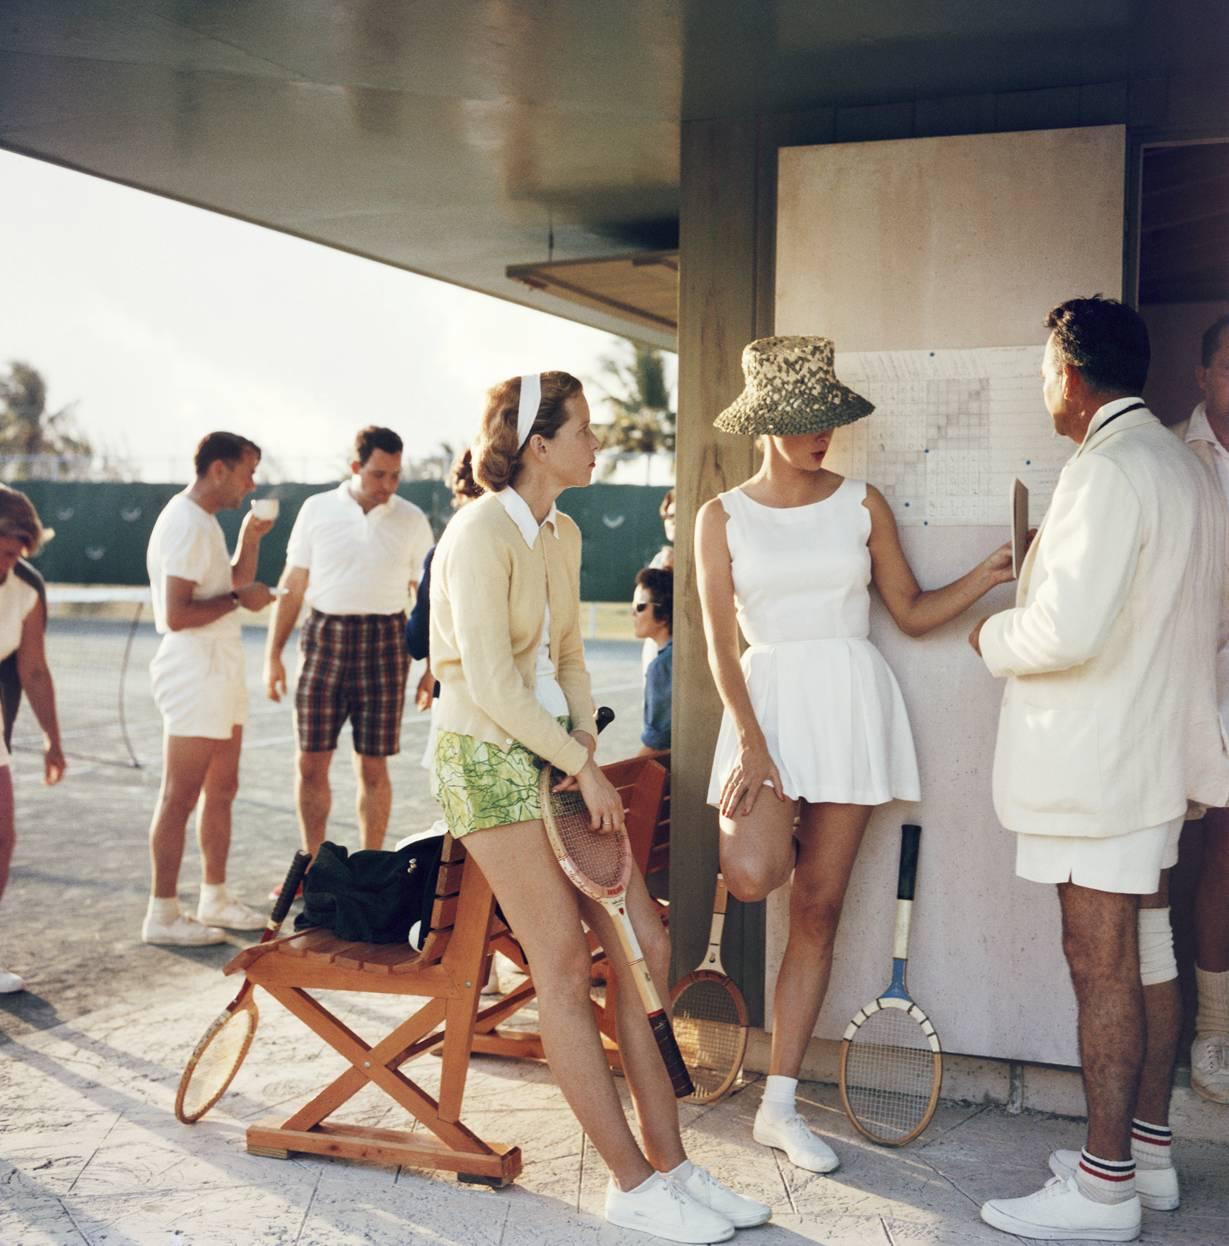 Slim Aarons Figurative Photograph - 'Tennis In The Bahamas'  (SLIM AARONS Estate Edition)